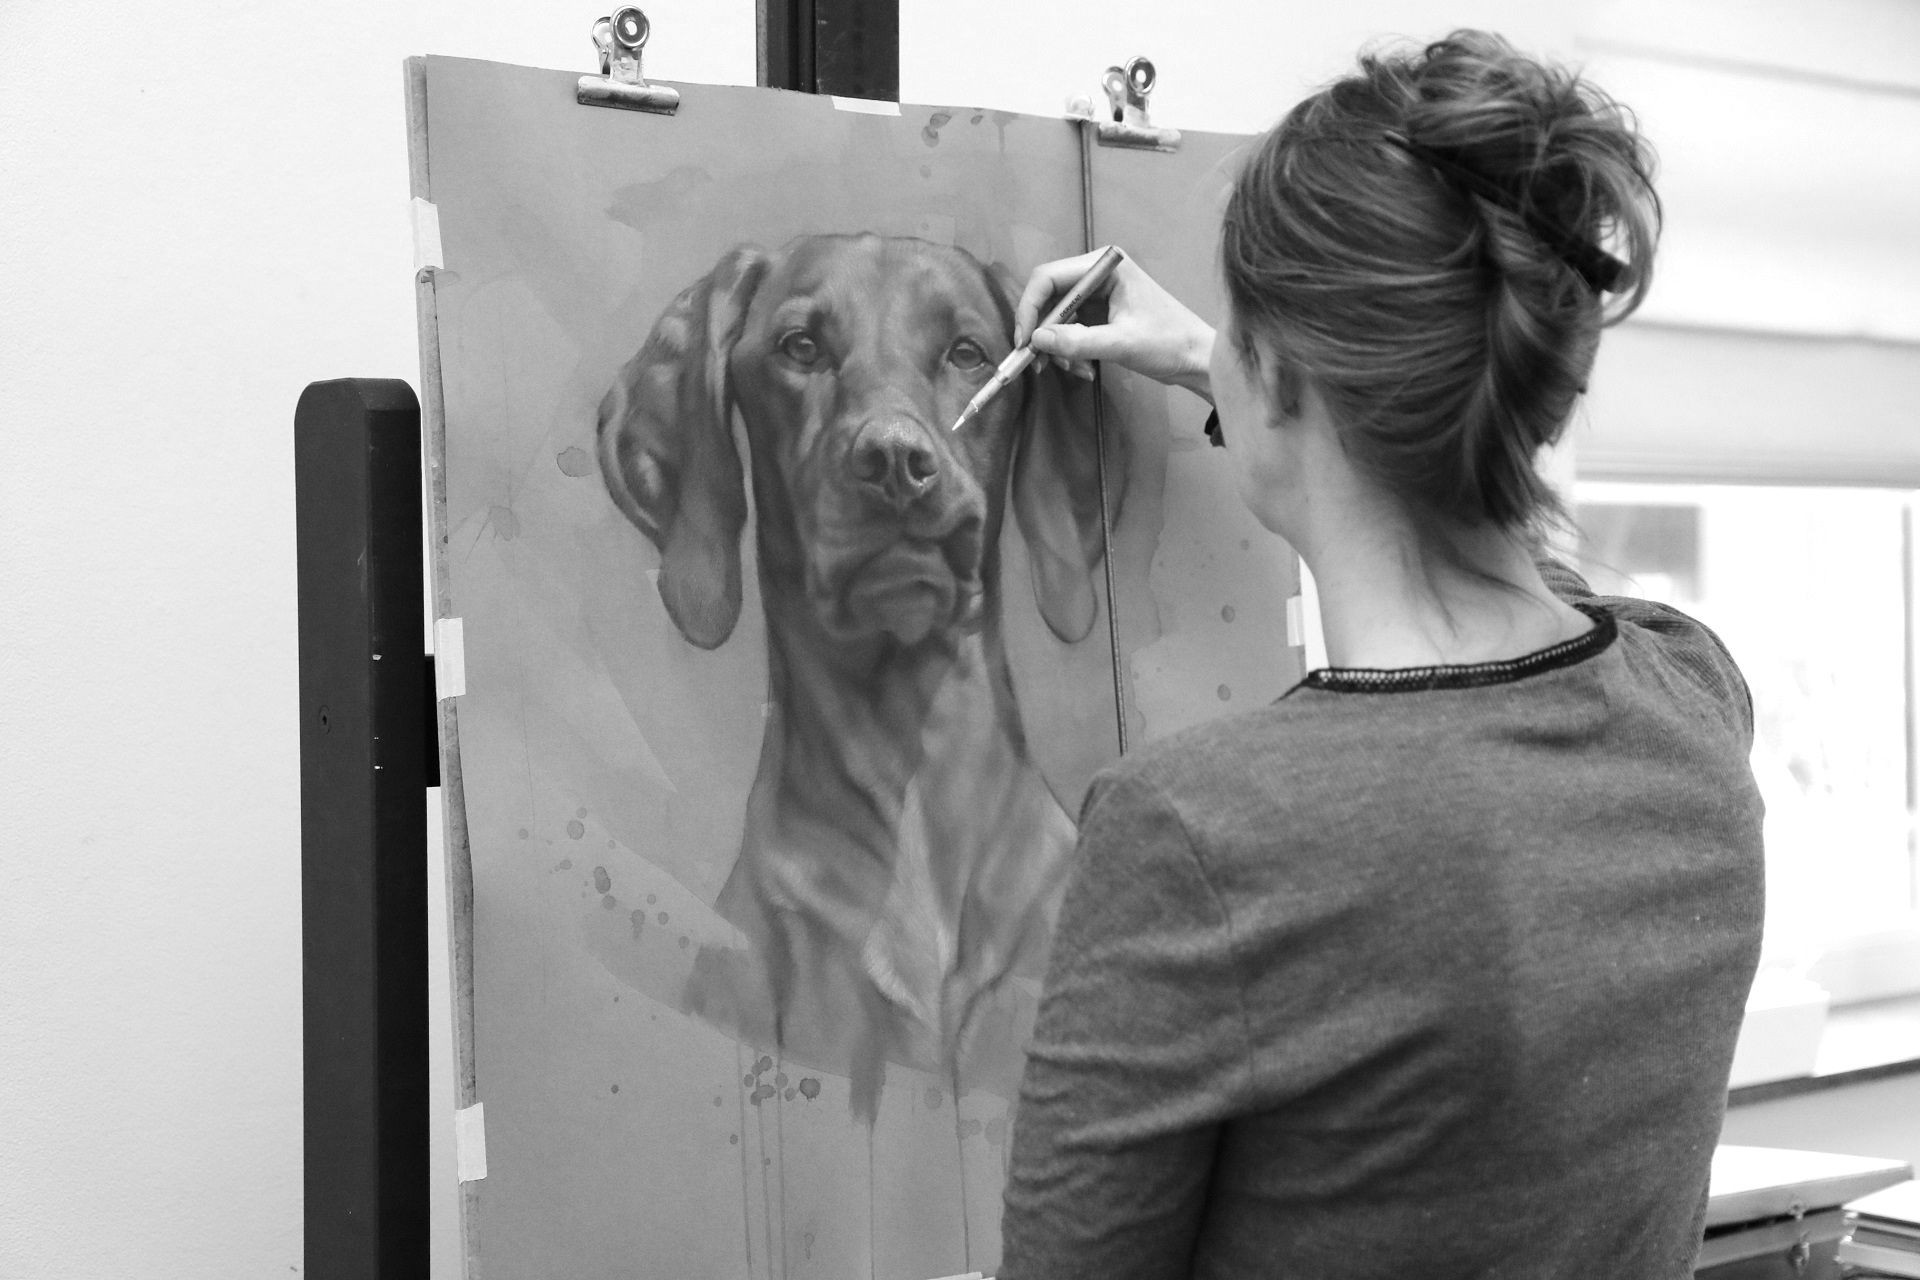 jennifer koning - bijzondere en karaktervolle portretten - tekeningen en schilderijen in olieverf en houtskool - hondenportret in uitvoering